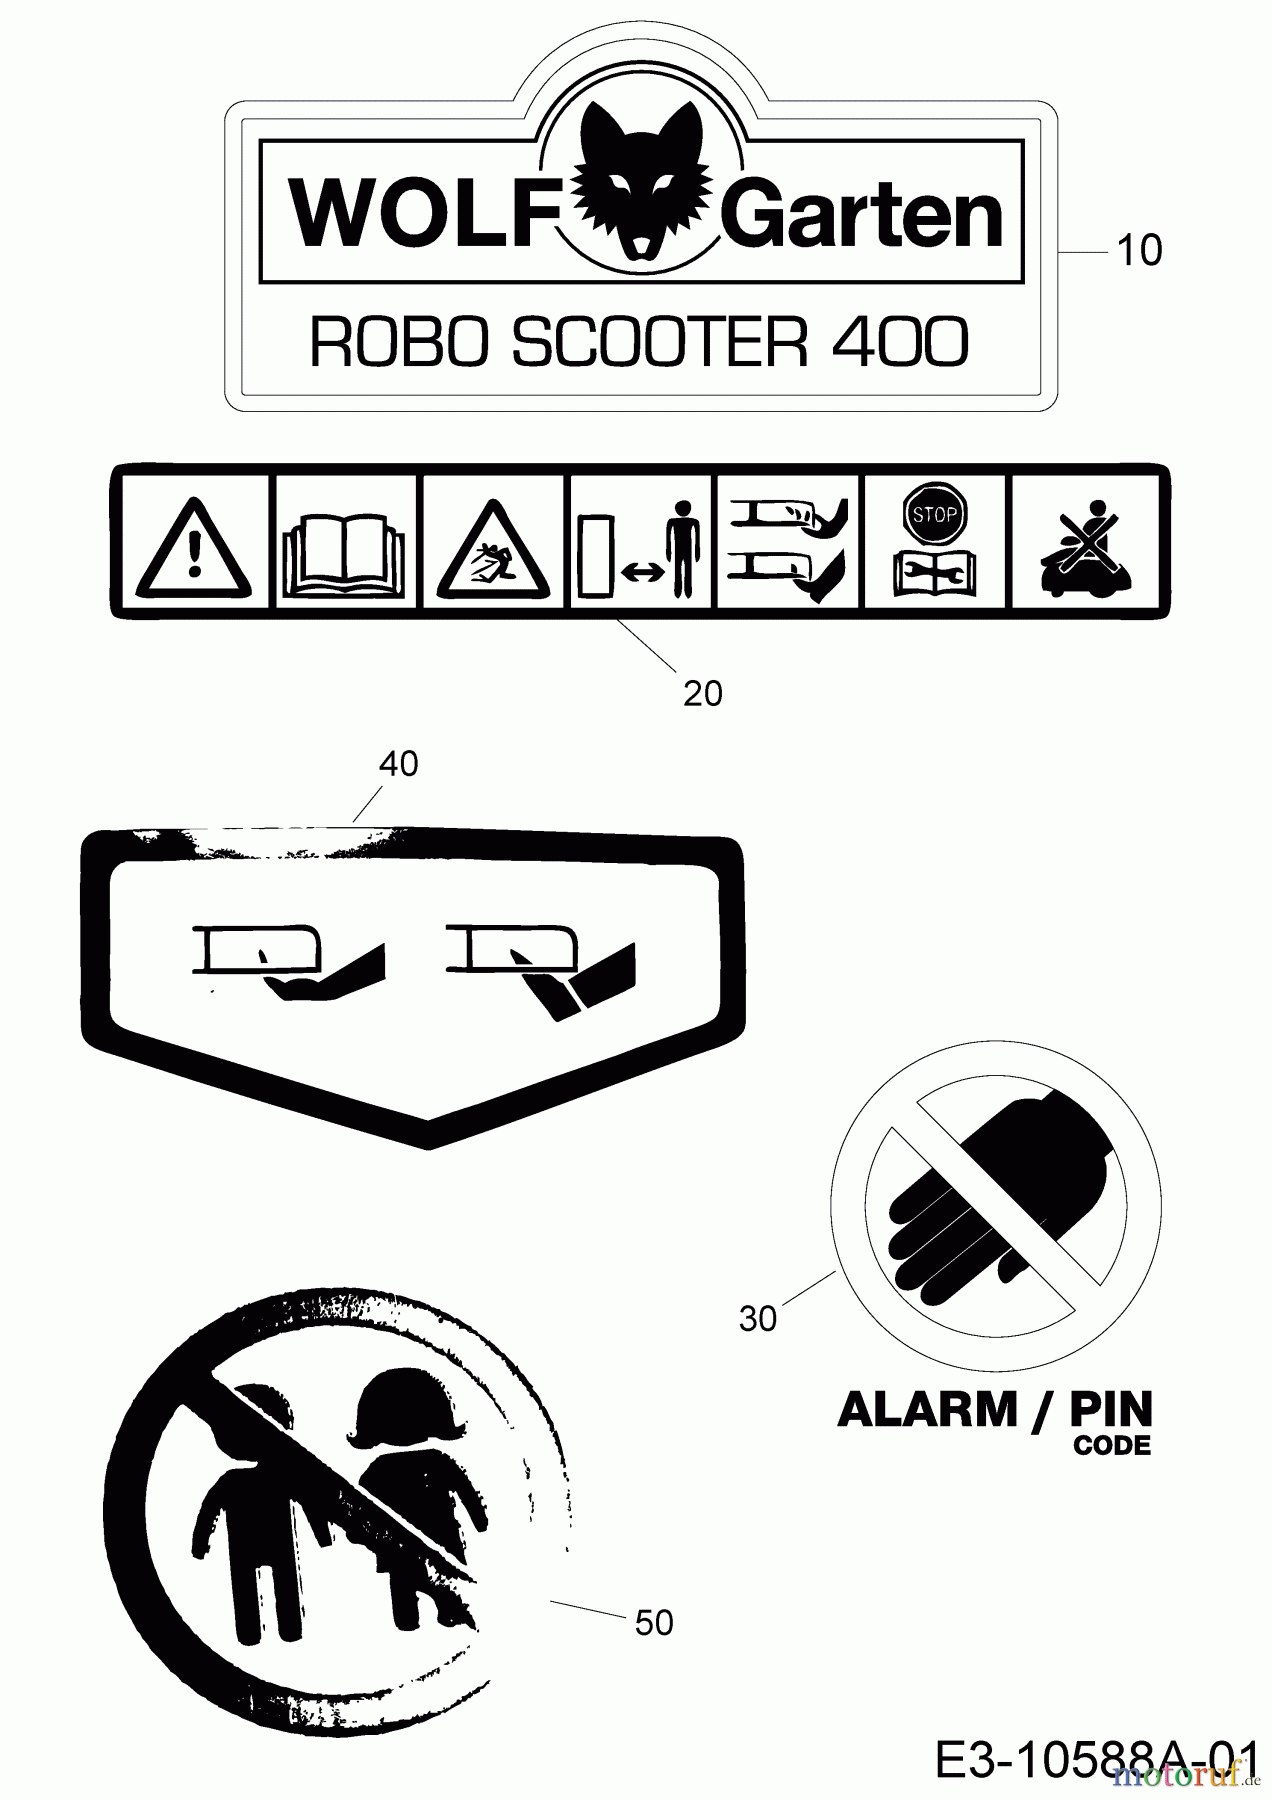  Wolf-Garten Tondeuse robot Robo Scooter 400 18BO04LF650  (2015) Decalcomanie